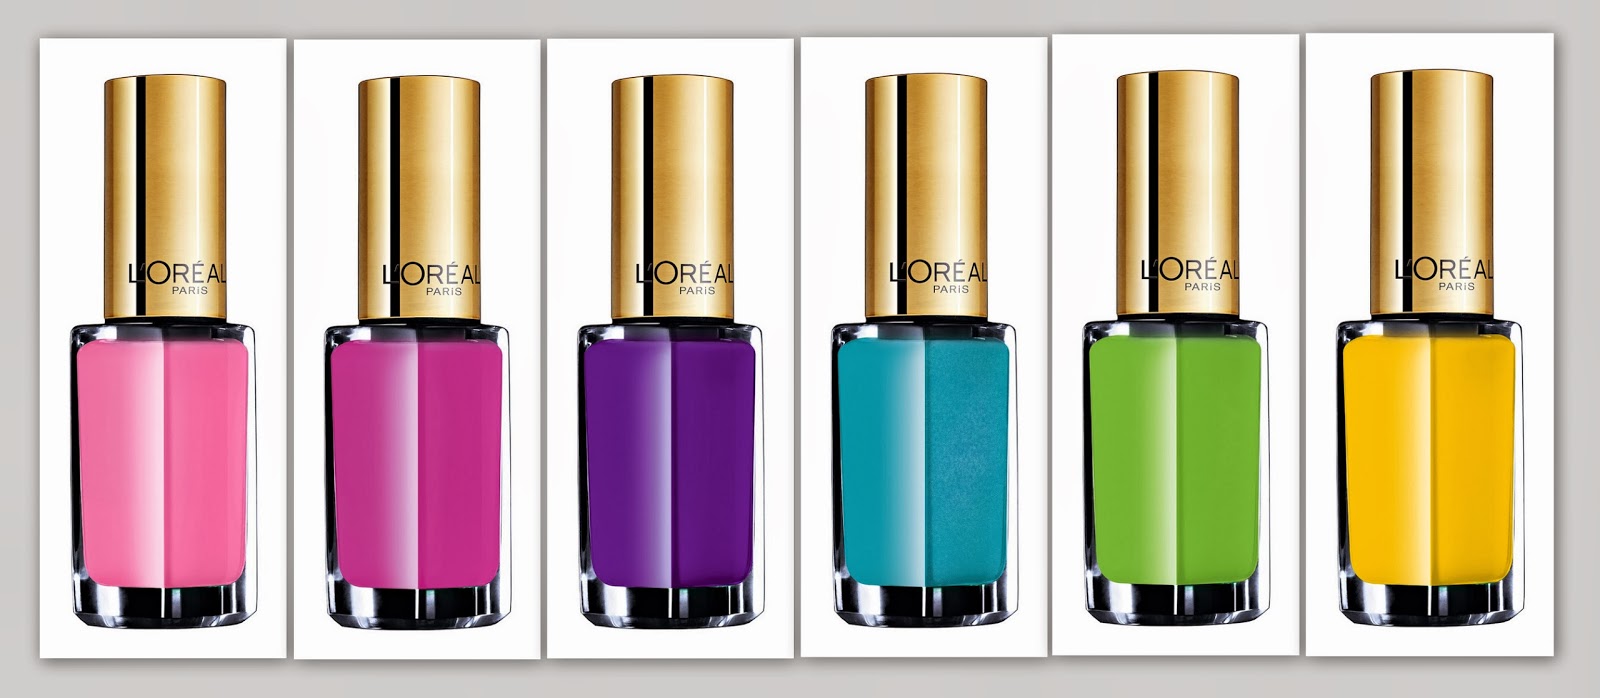 Product Review: L'Oreal Colour Riche Le Vernis Summer 2013 Collection